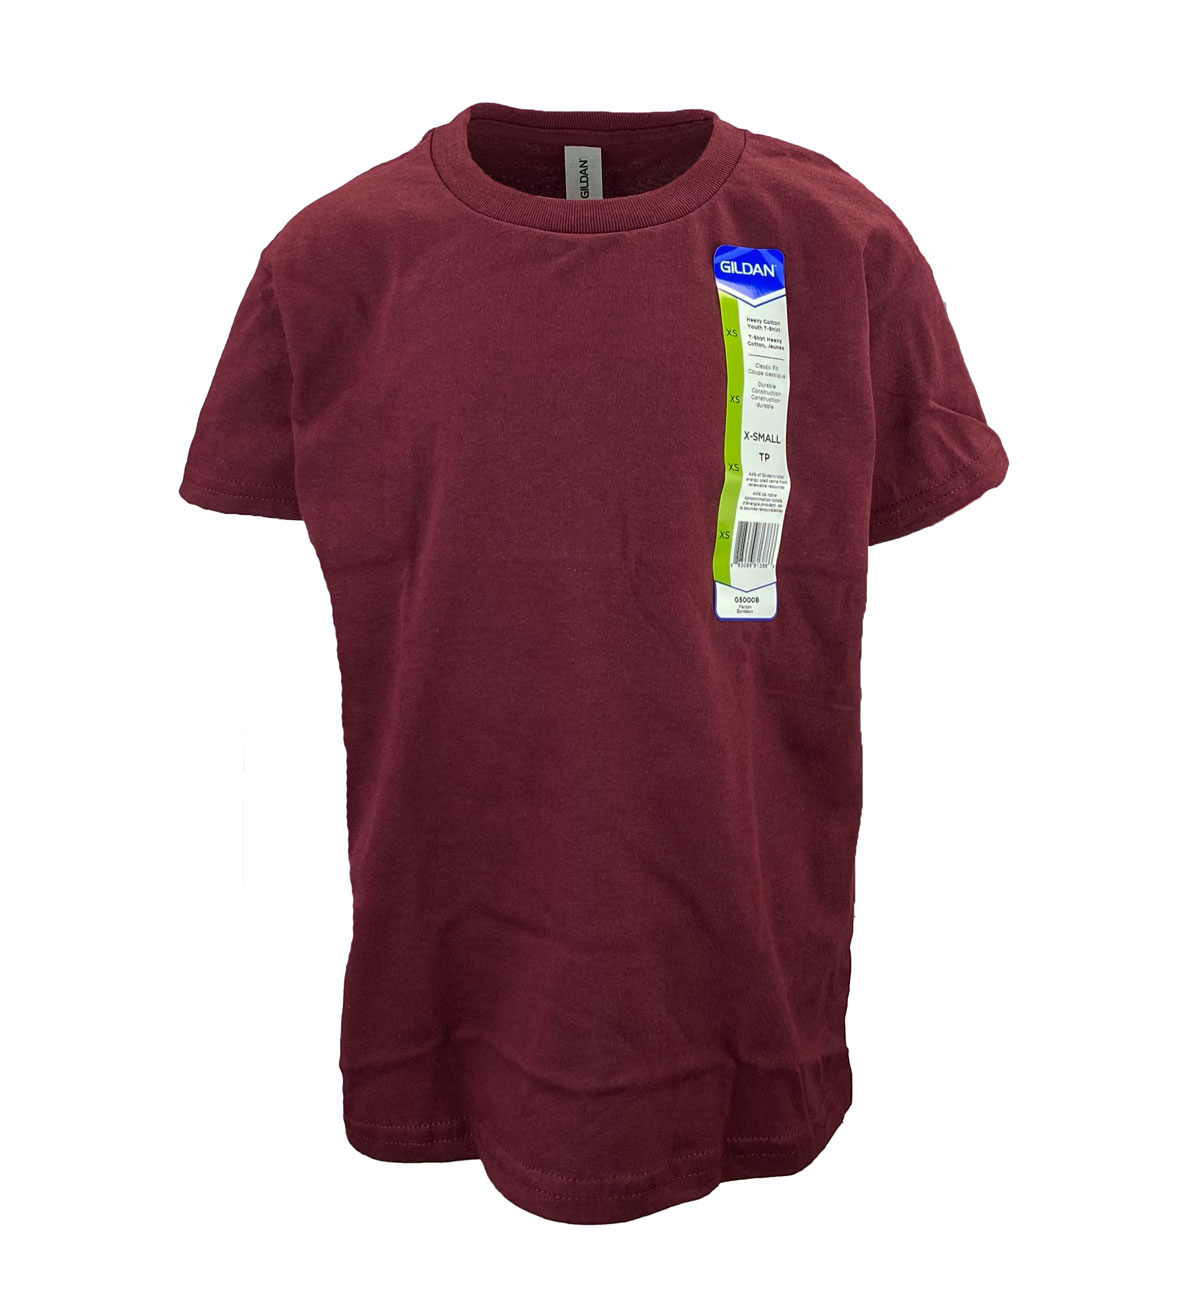 Boys Tee Shirts - Maroon-RG Riley Wholesale Off Price Clothing ...